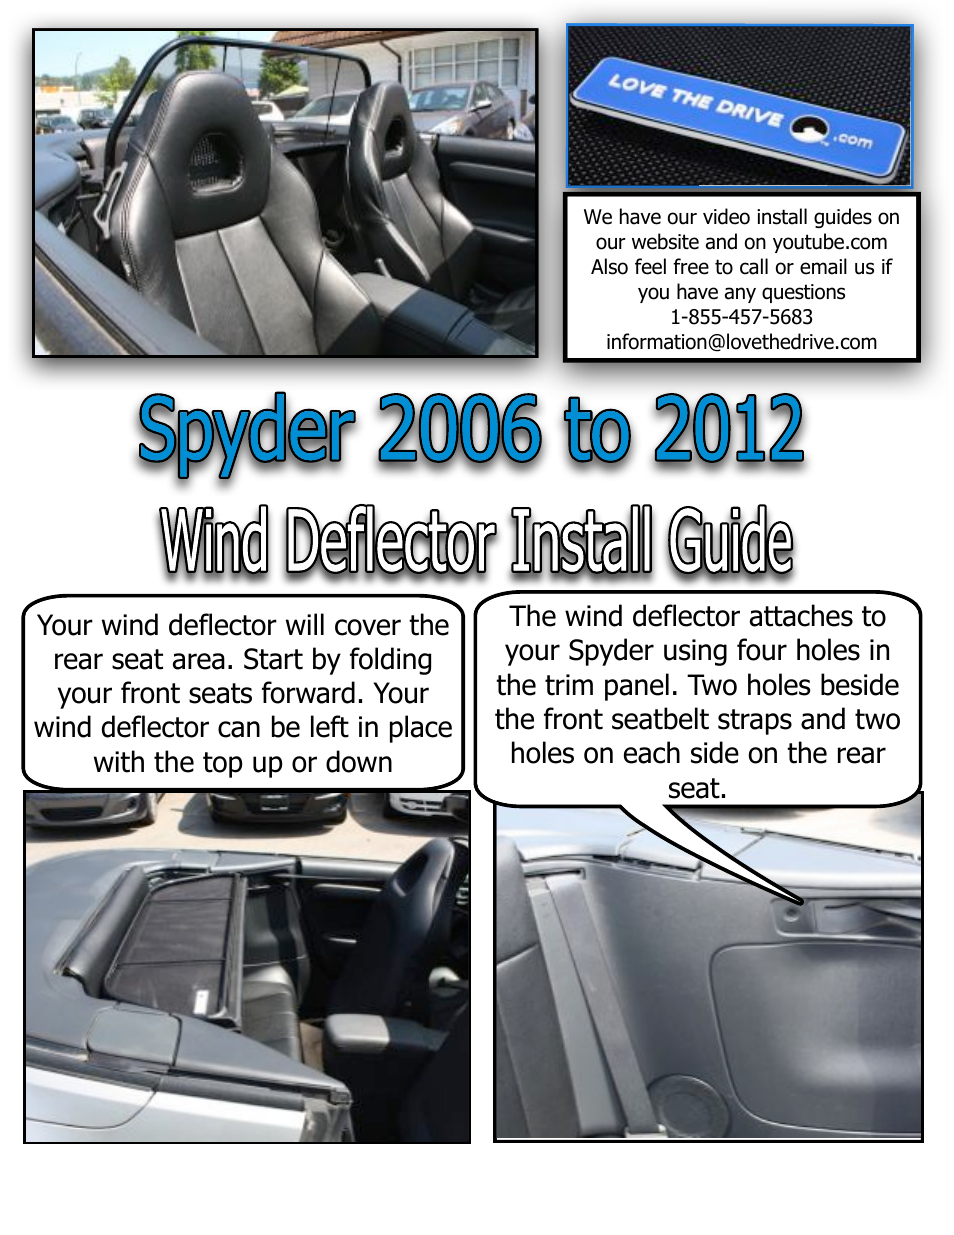 Spyder Wind Deflector 2006 to 2012